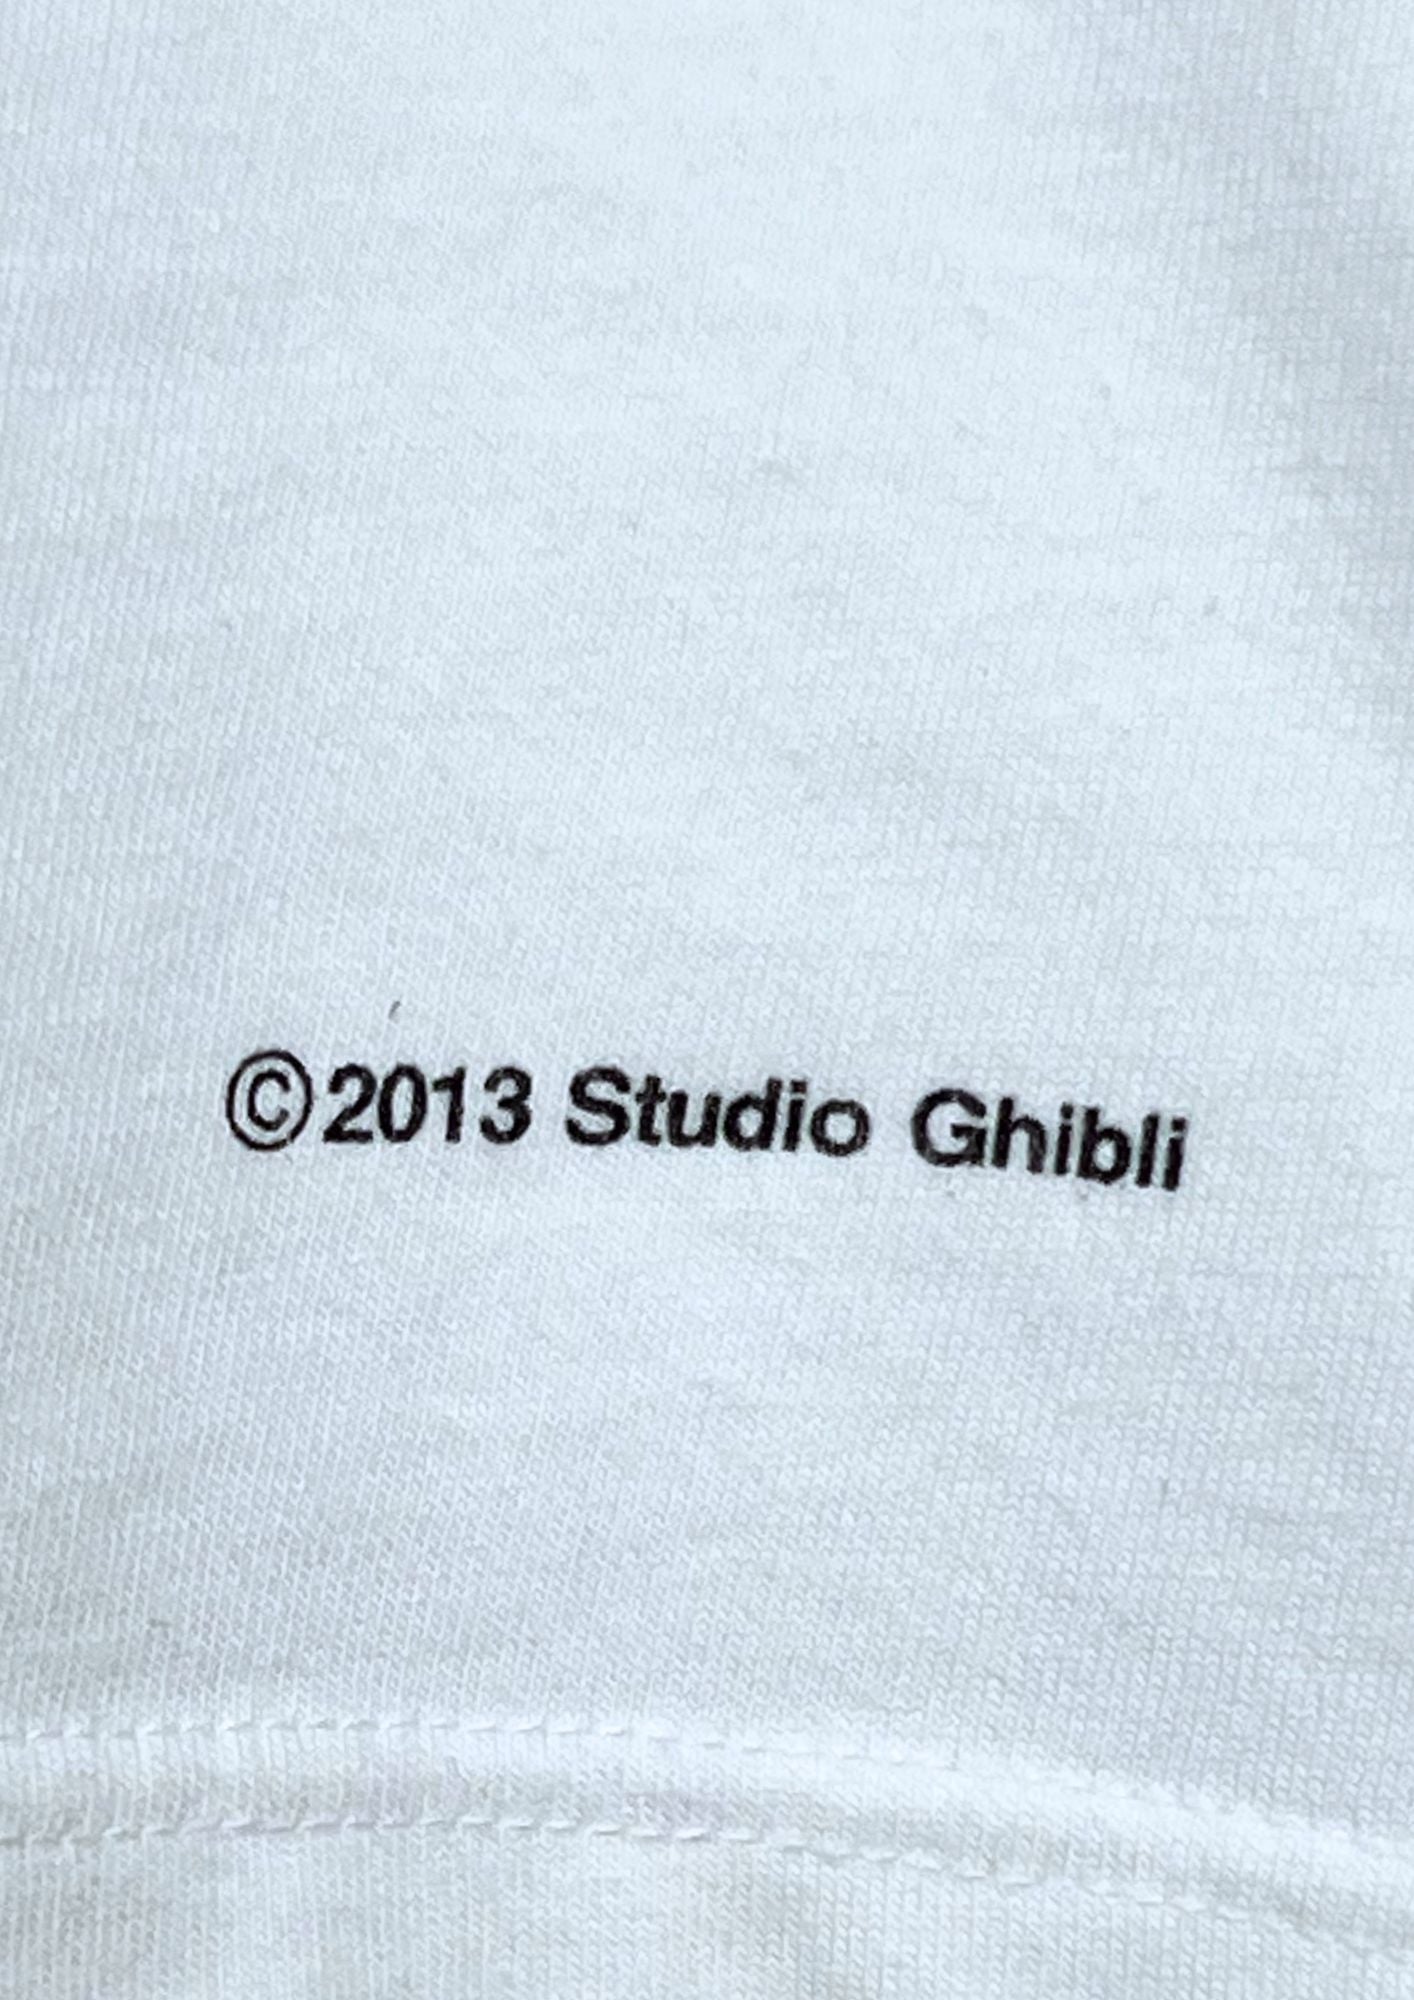 2013 Studio Ghibli Totoro x Rockin'on Rock in Japan Fes. Totoro T-shirt